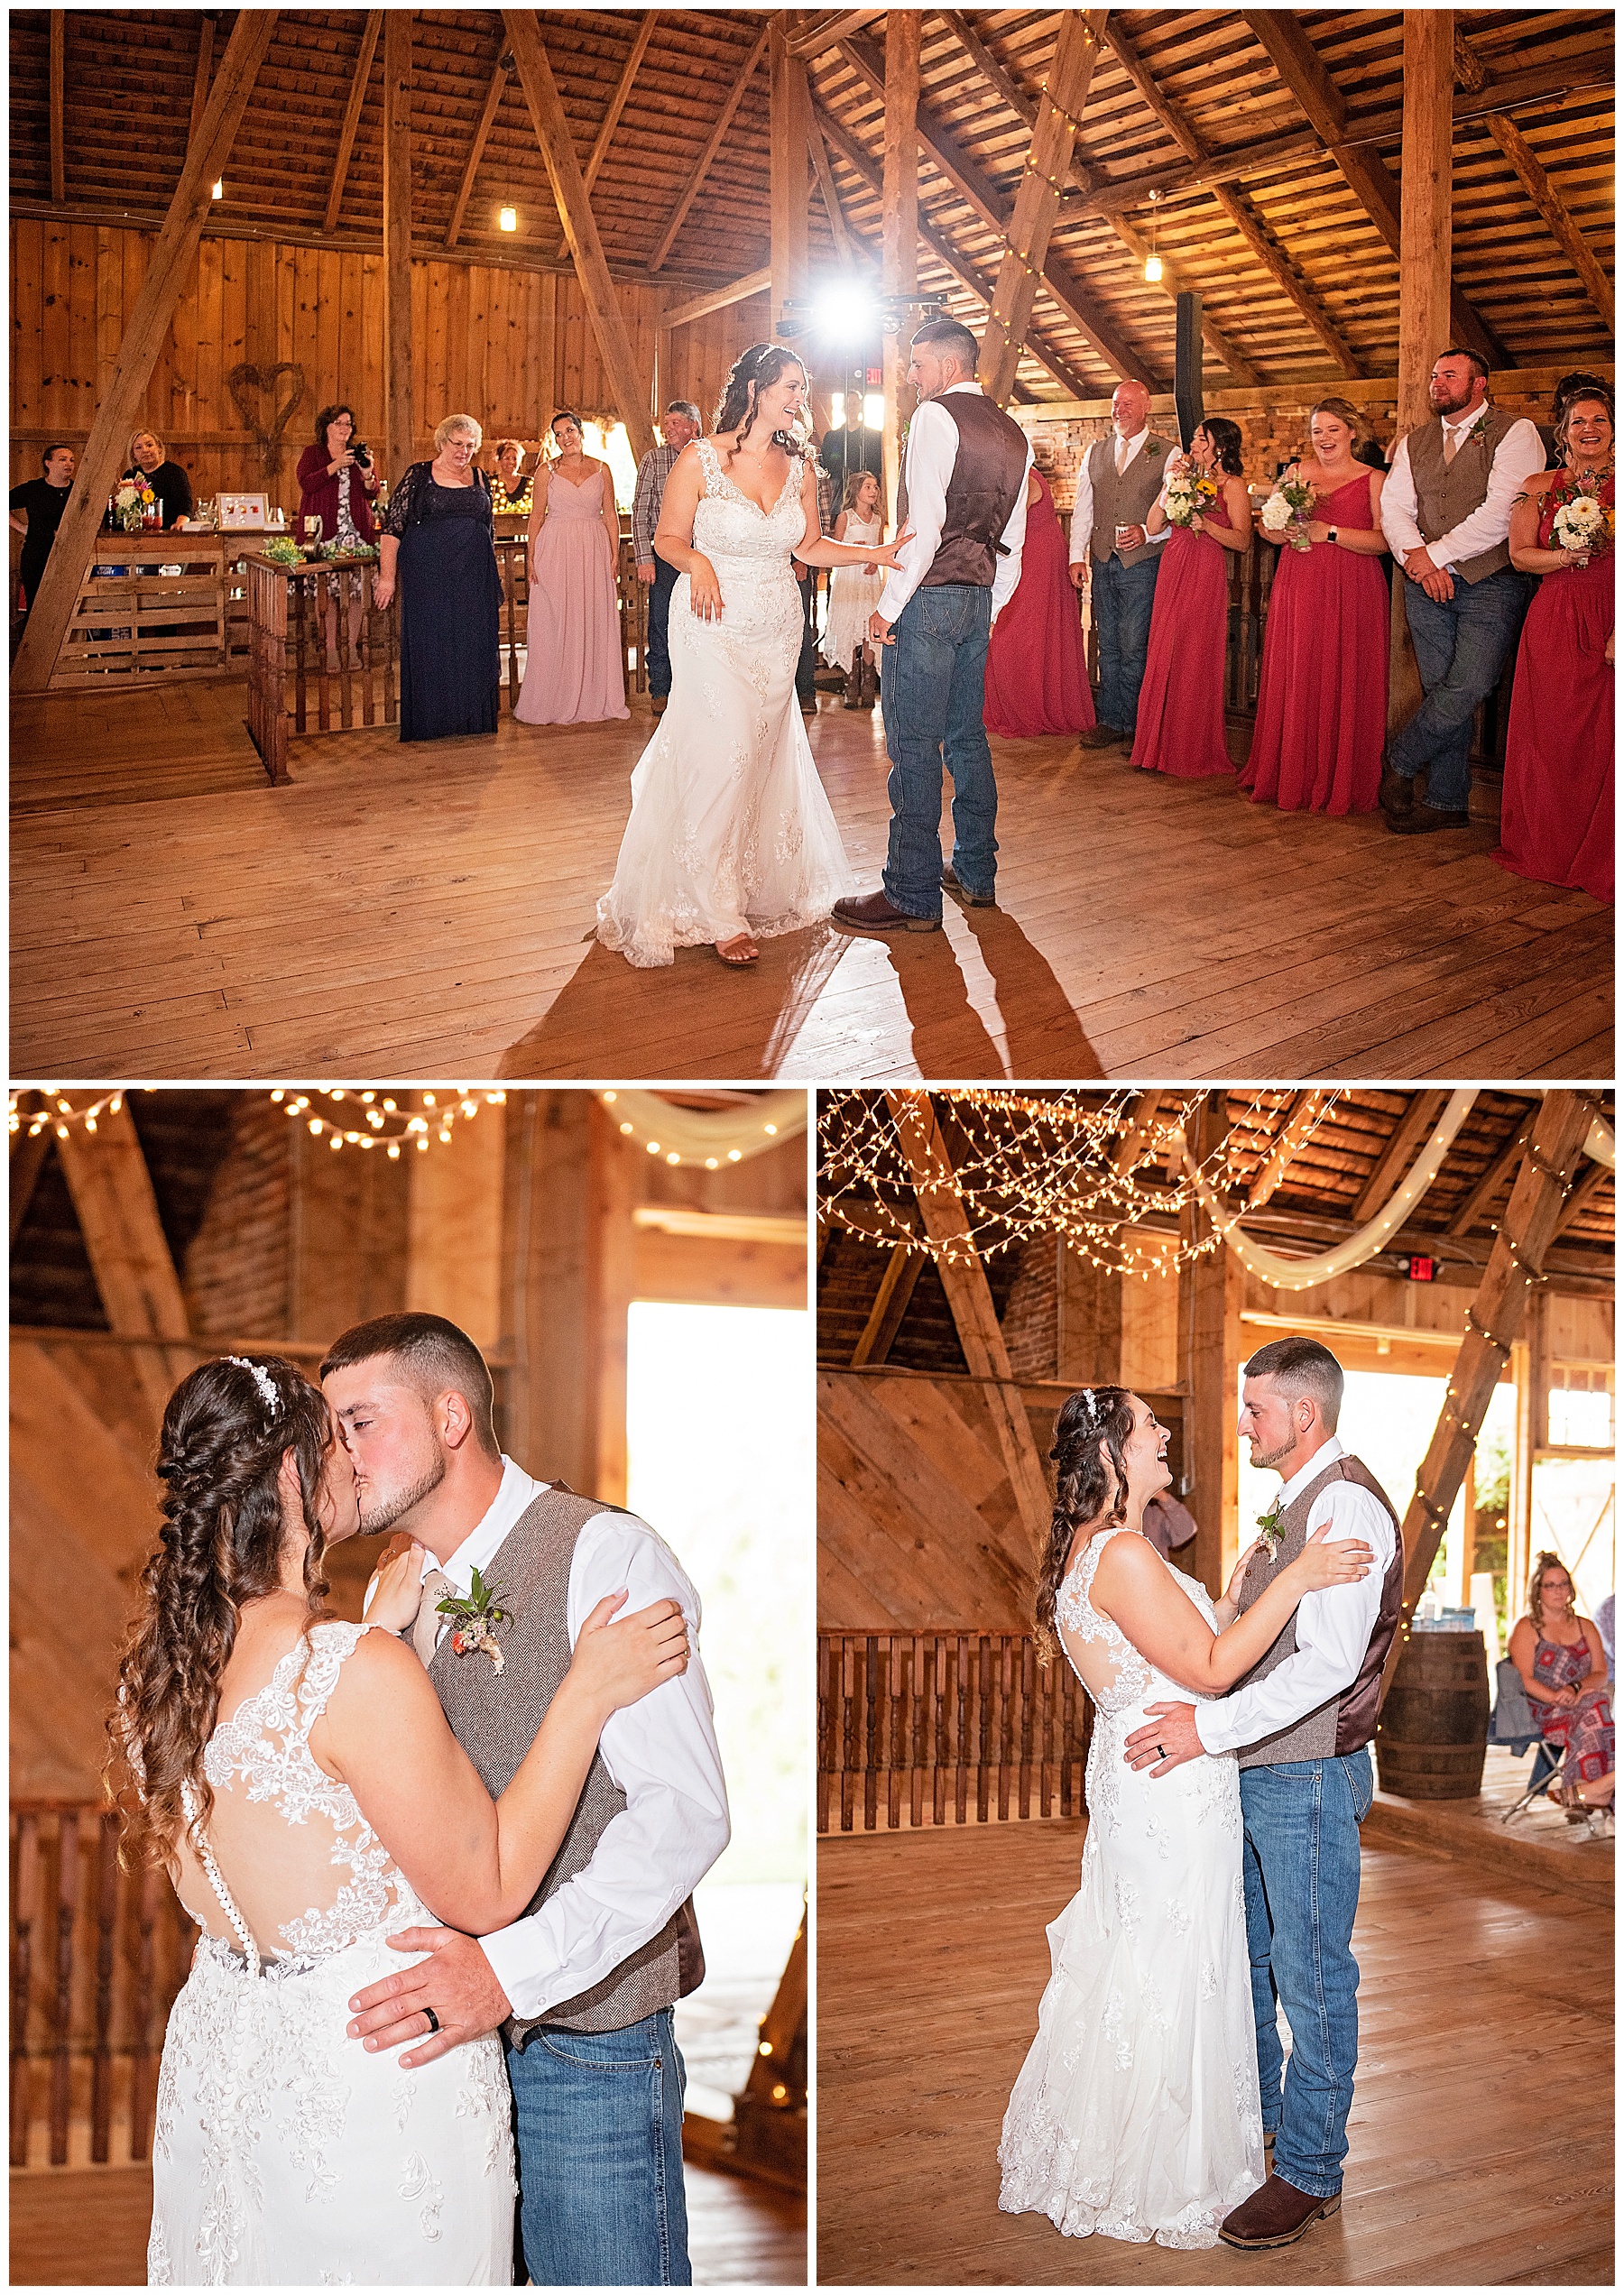 EARLY AUTUMN WEDDING AT WILSON'S BITTERSWEET BARN